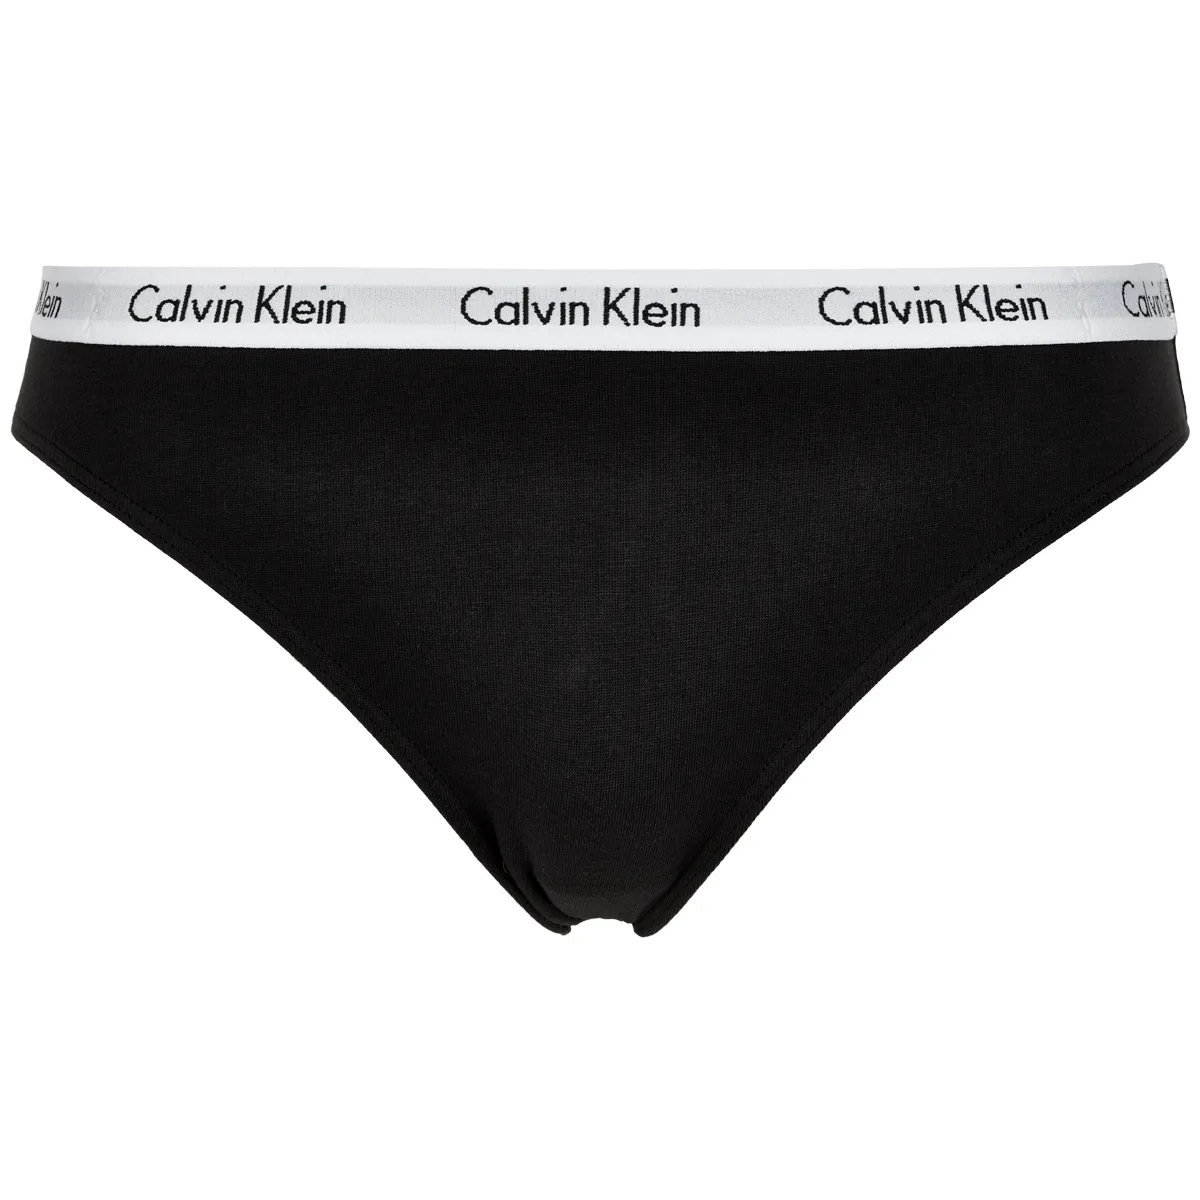 Ejeren idiom Vær sød at lade være Calvin Klein • CALVIN KLEIN TAI, SORT • Pris kr. 135